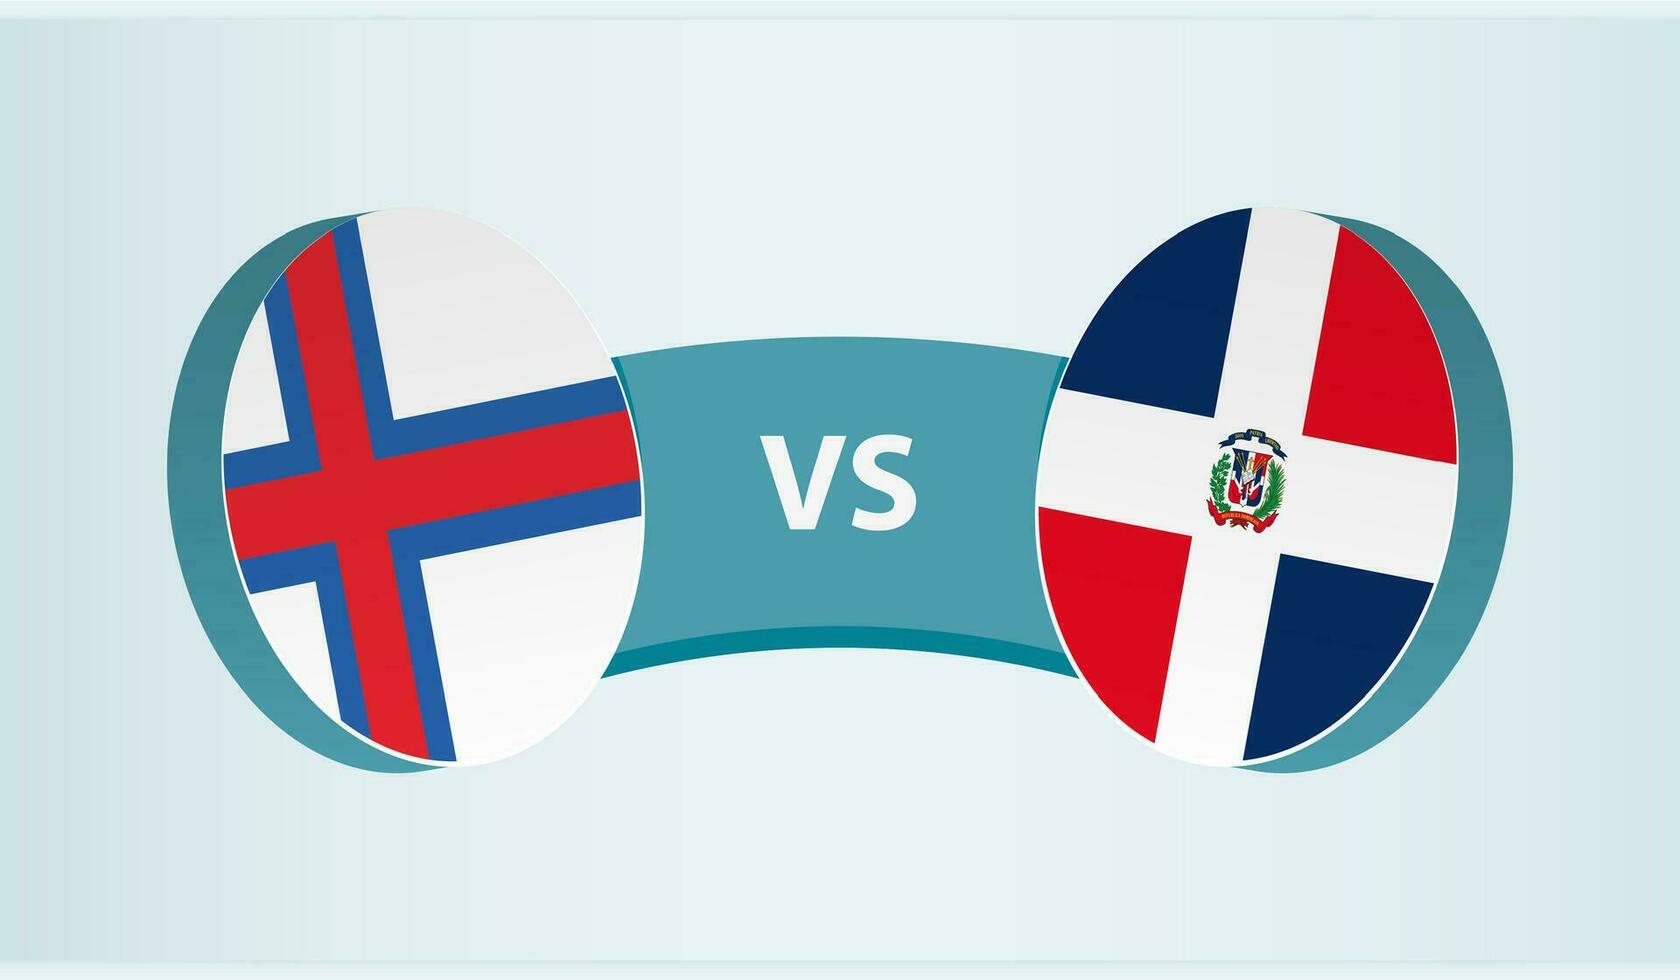 Faroe Islands versus Dominican Republic, team sports competition concept. vector